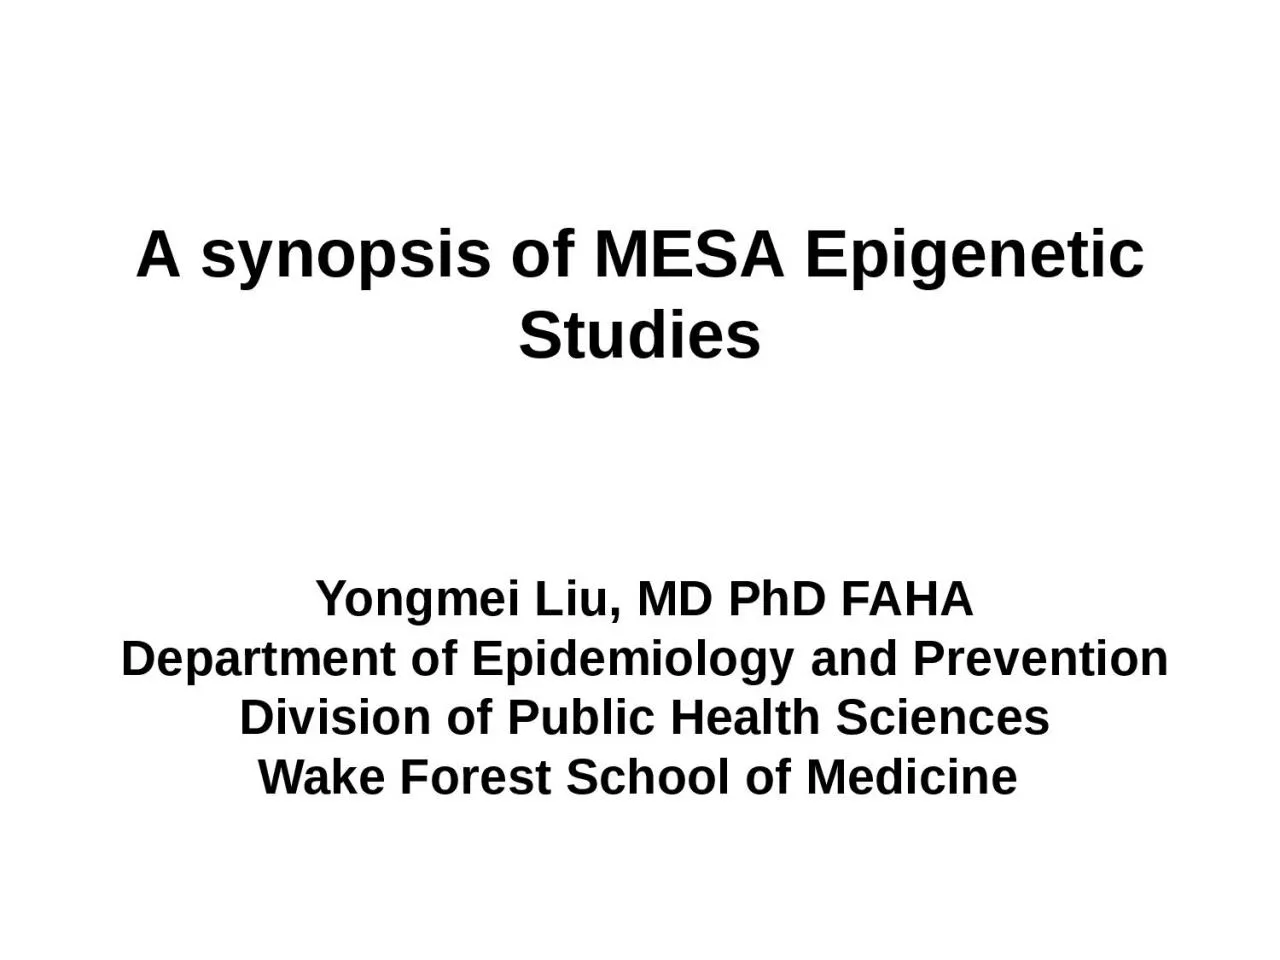 A synopsis of MESA Epigenetic Studies